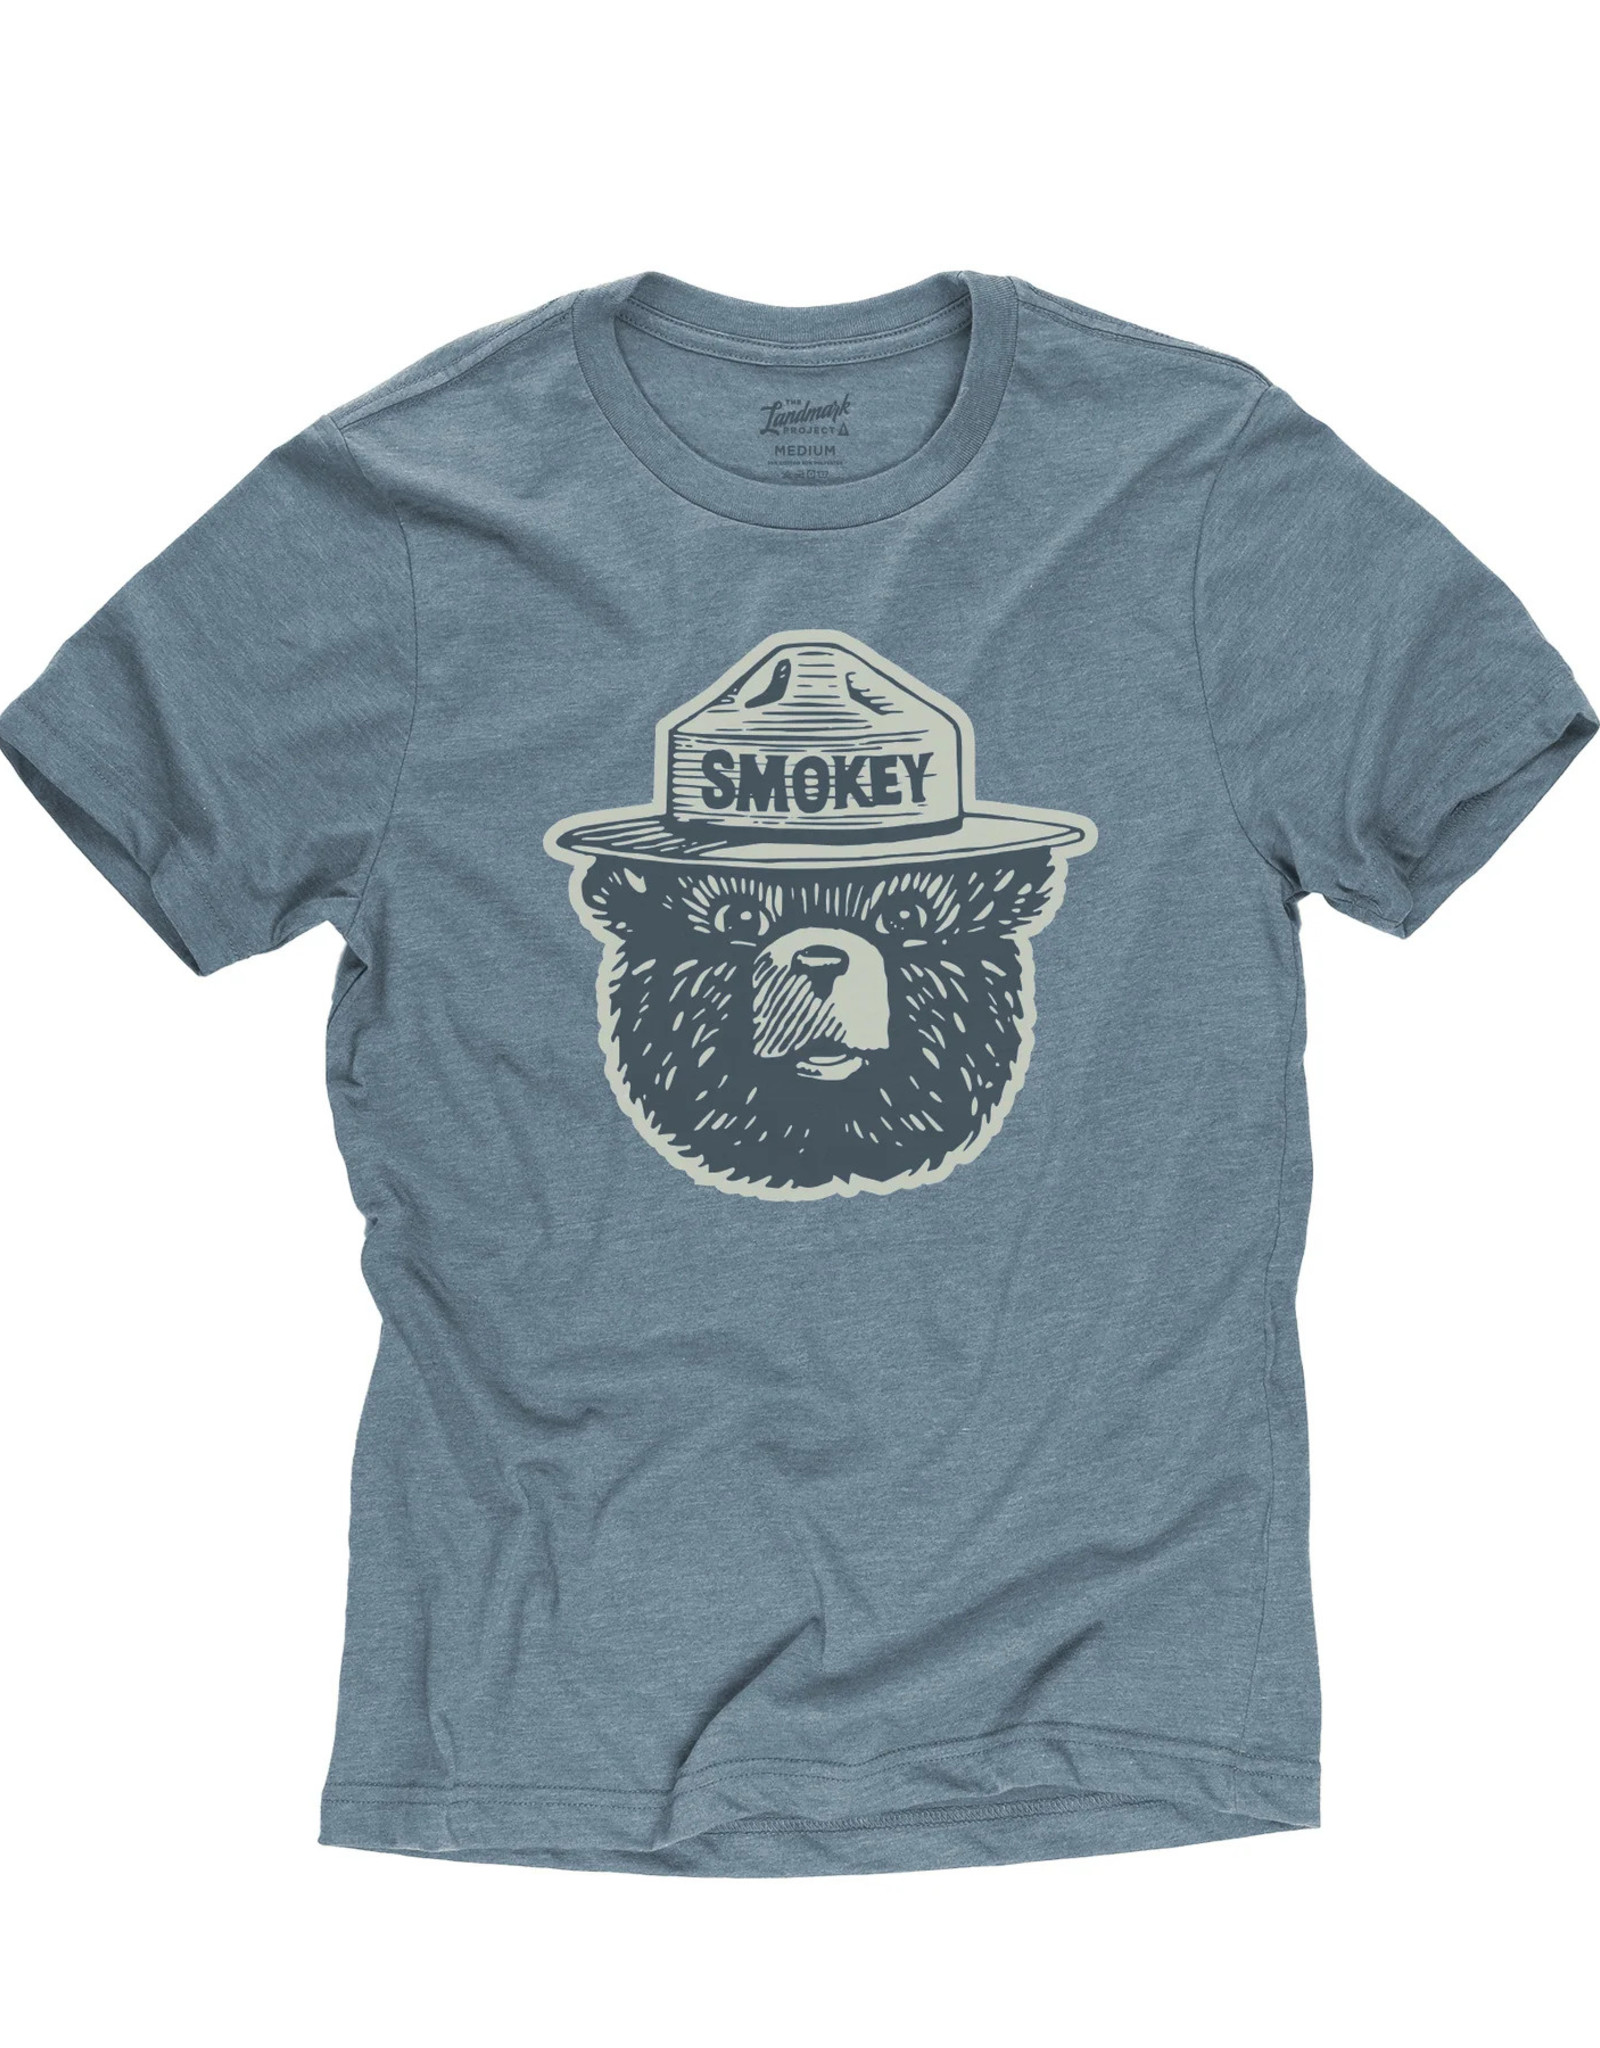 Smokey Logo T-shirt | XL / Manatee  -The Landmark Project